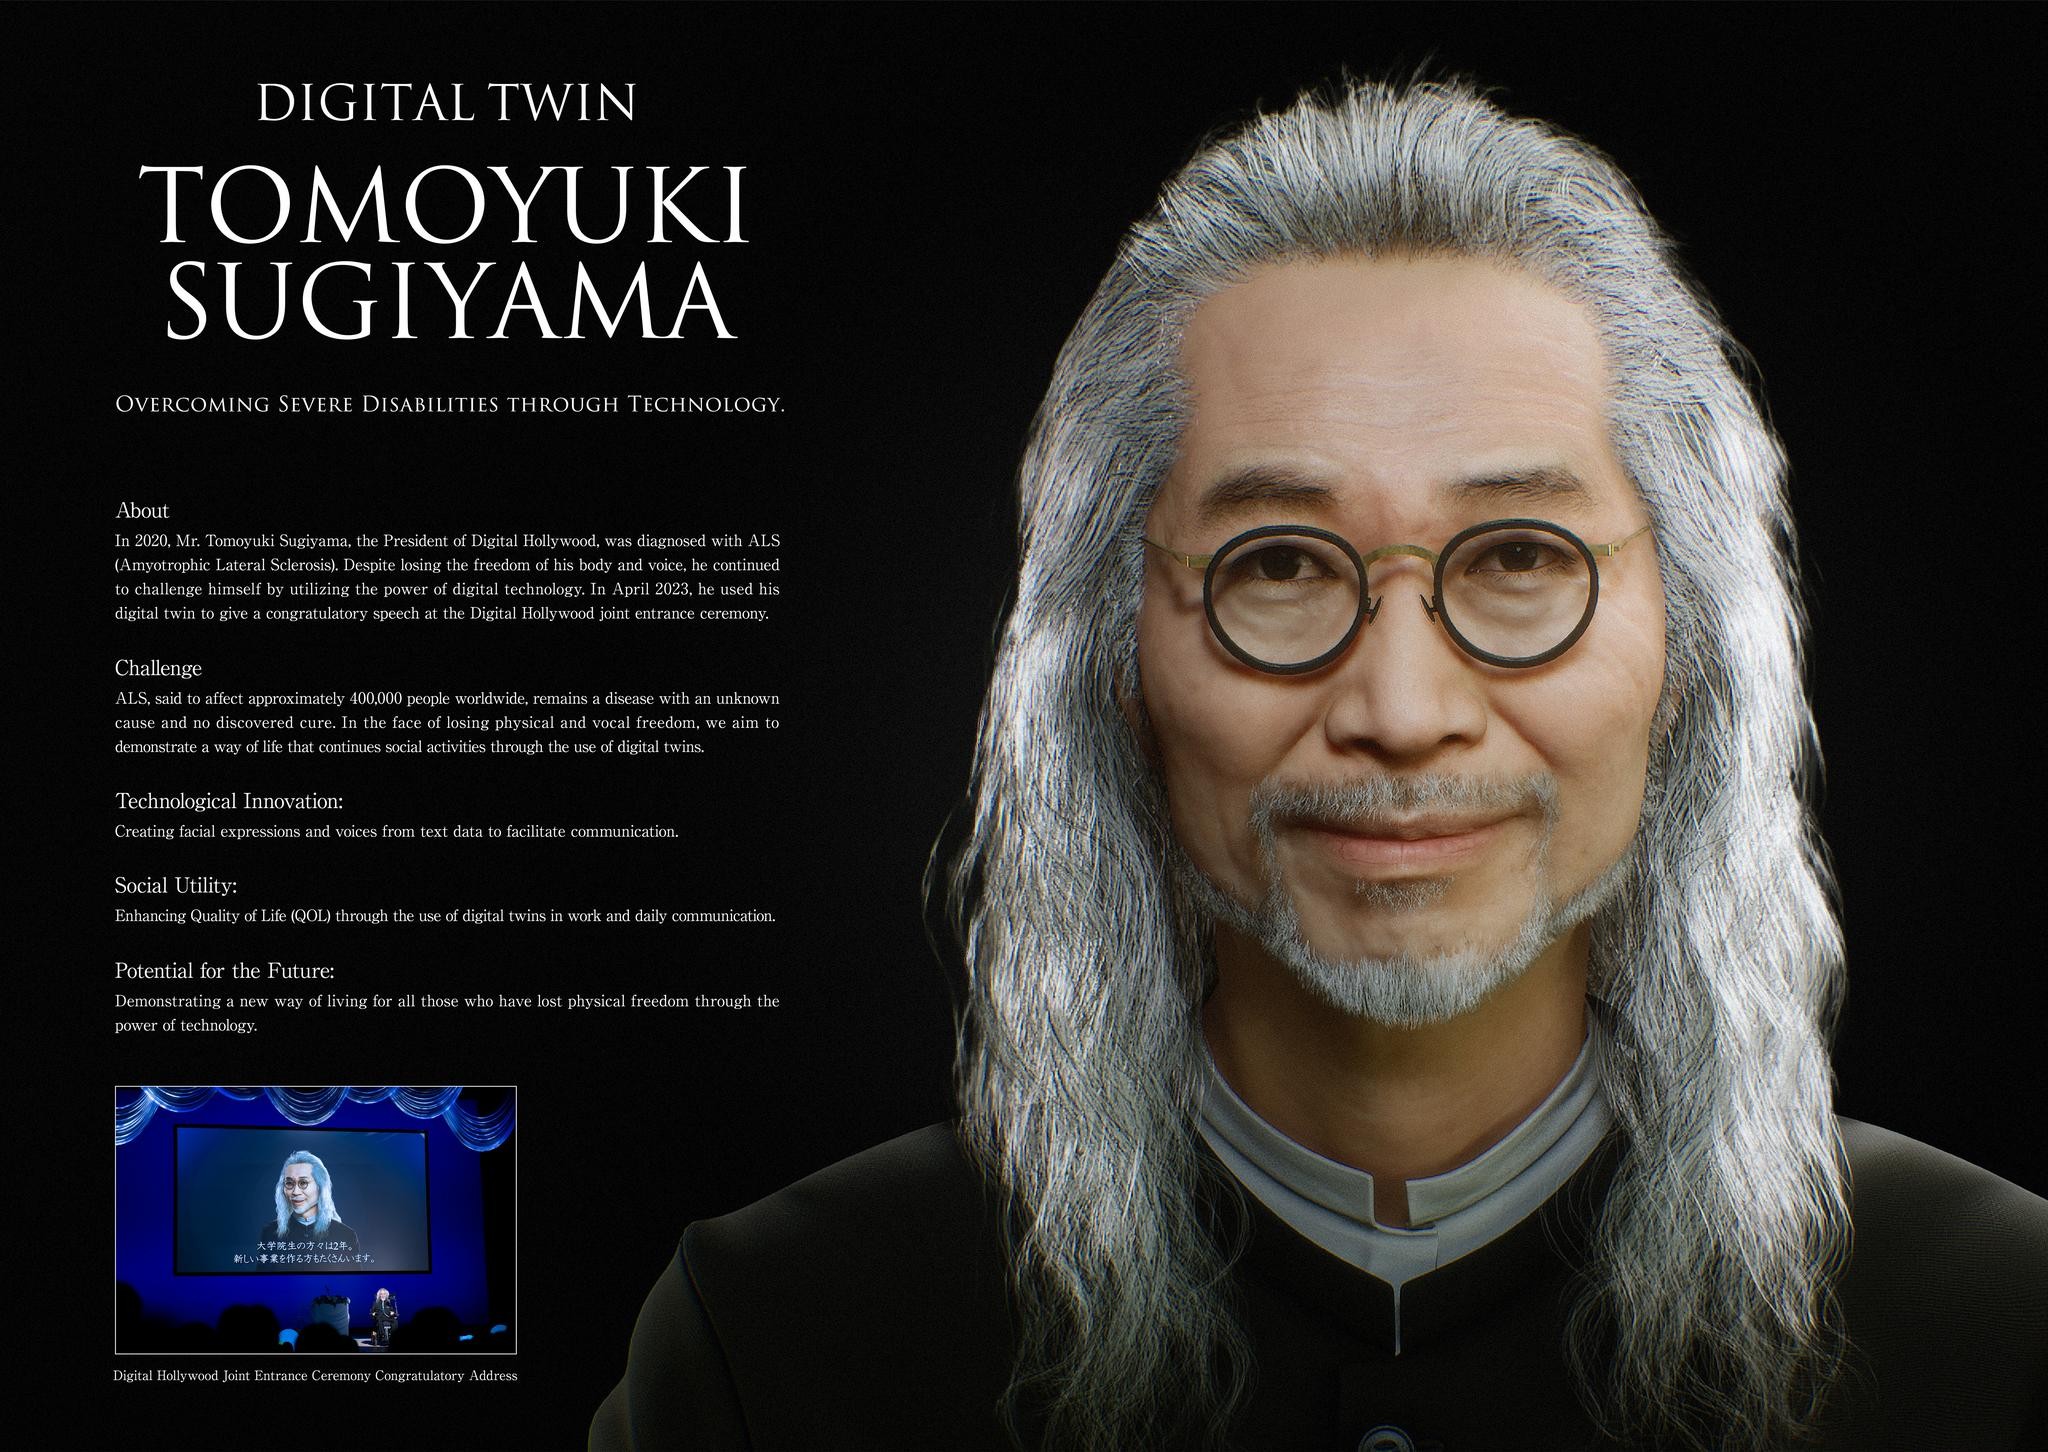 DIGITAL TWIN TOMOYUKI SUGIYAMA -OVERCOMING SEVERE DISABILITIES THROUGH TECHNOLOGY